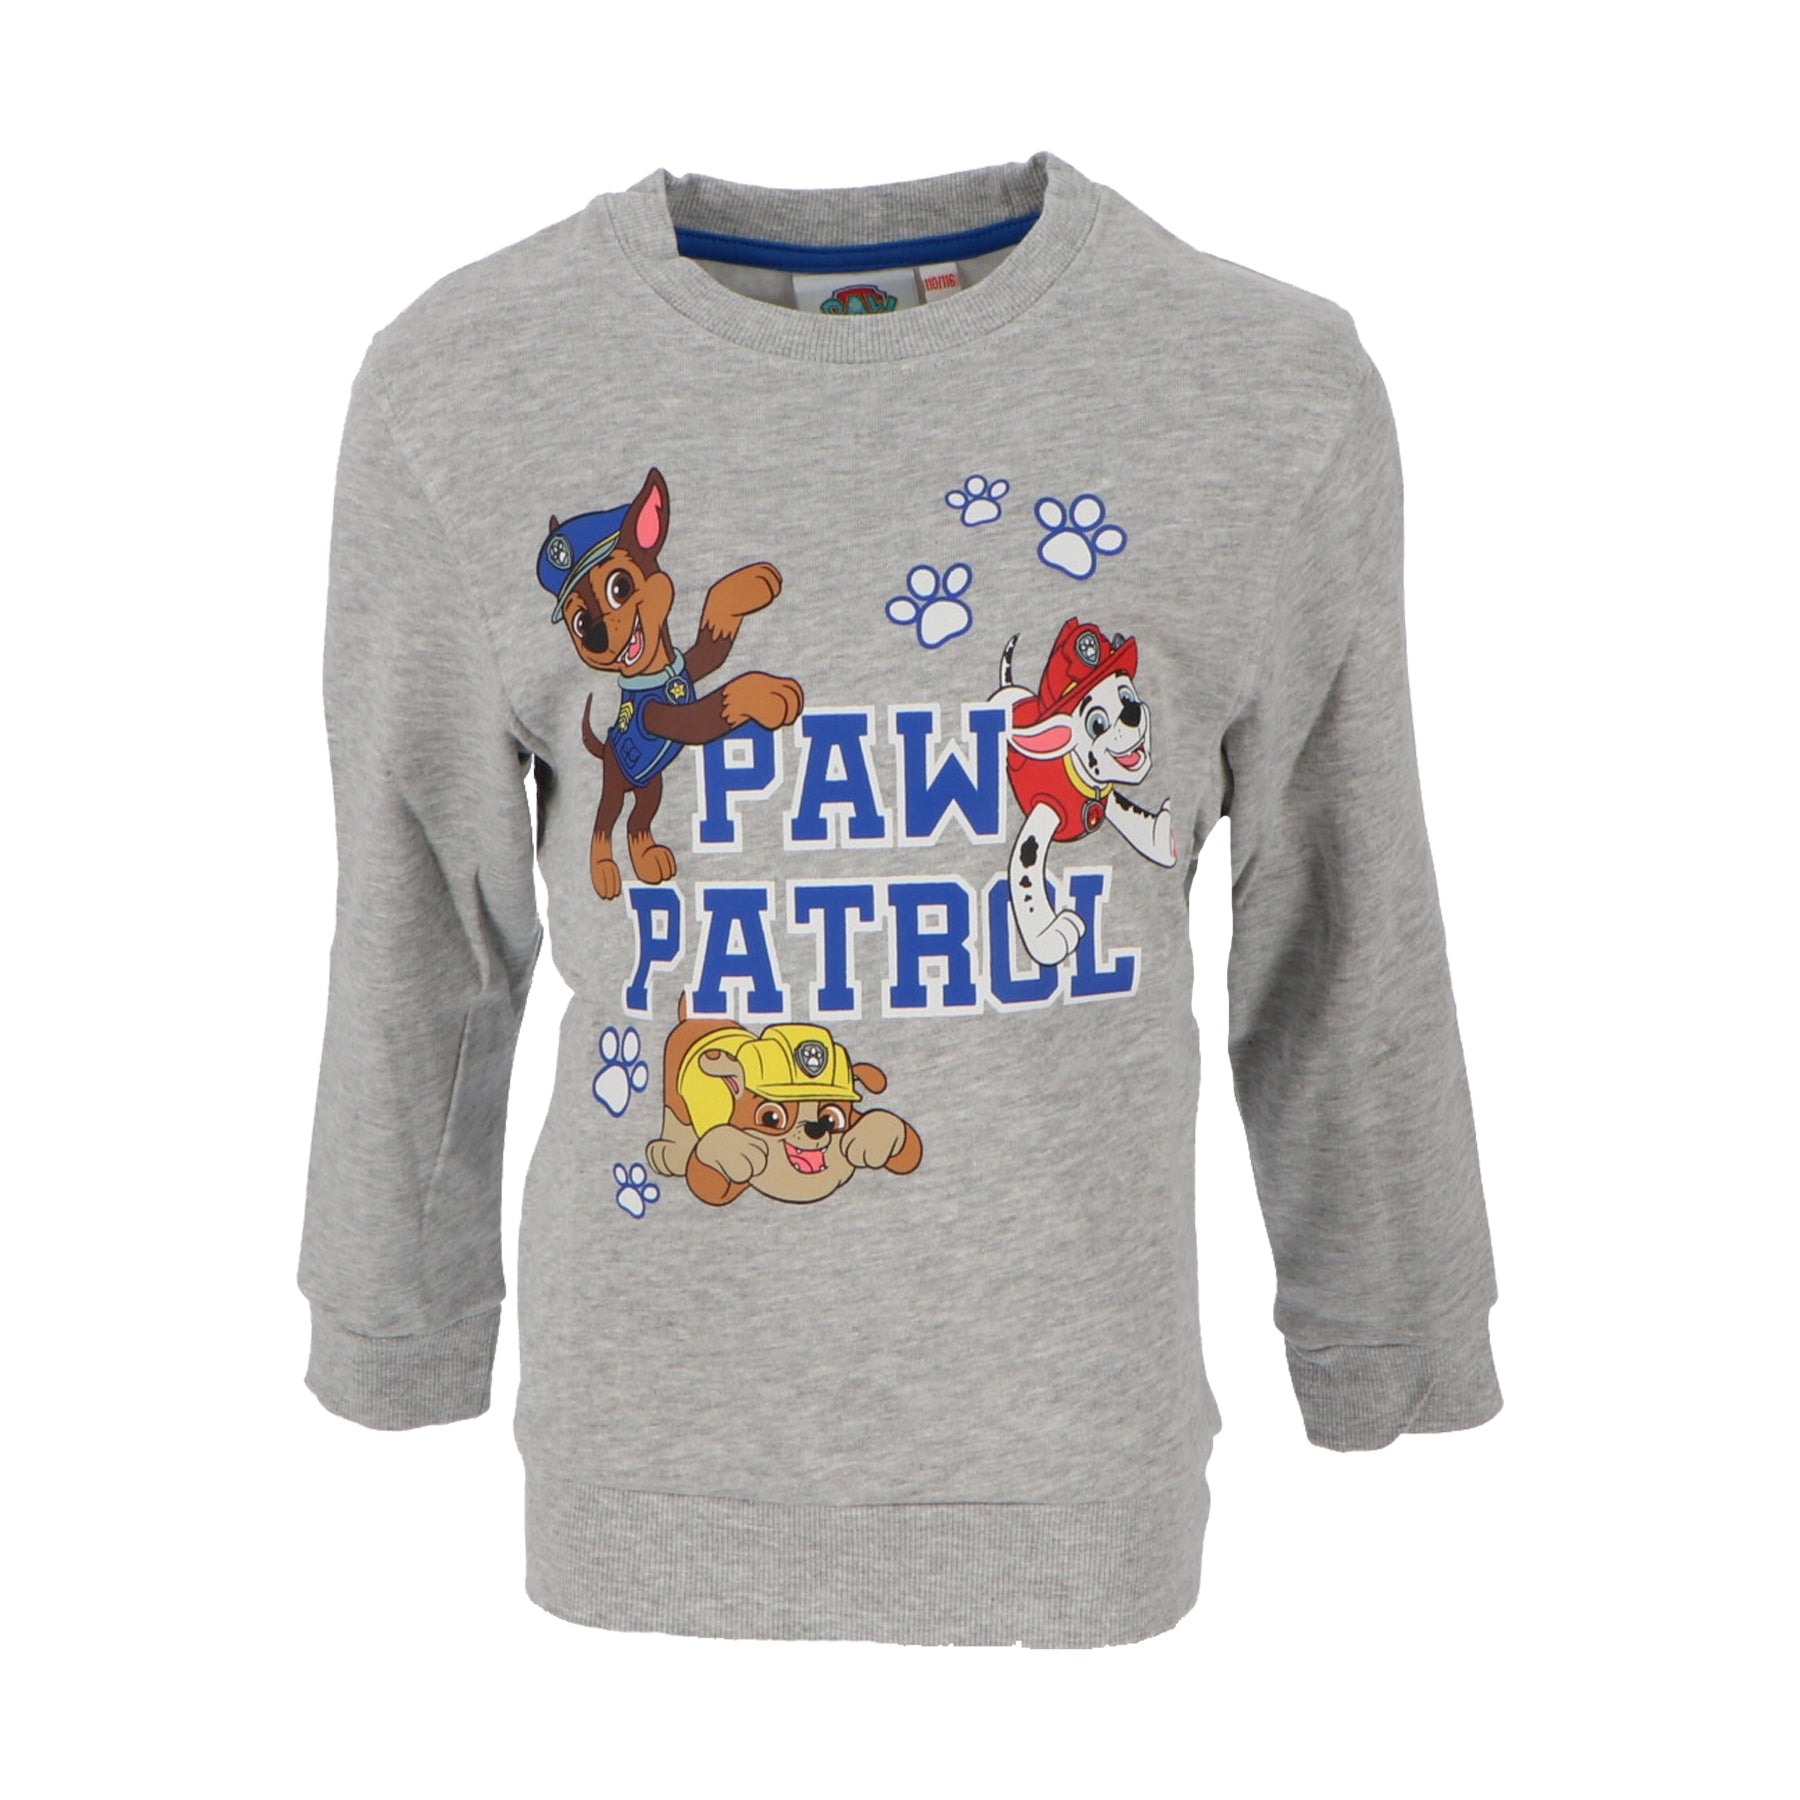 Paw patrol sweatshirt